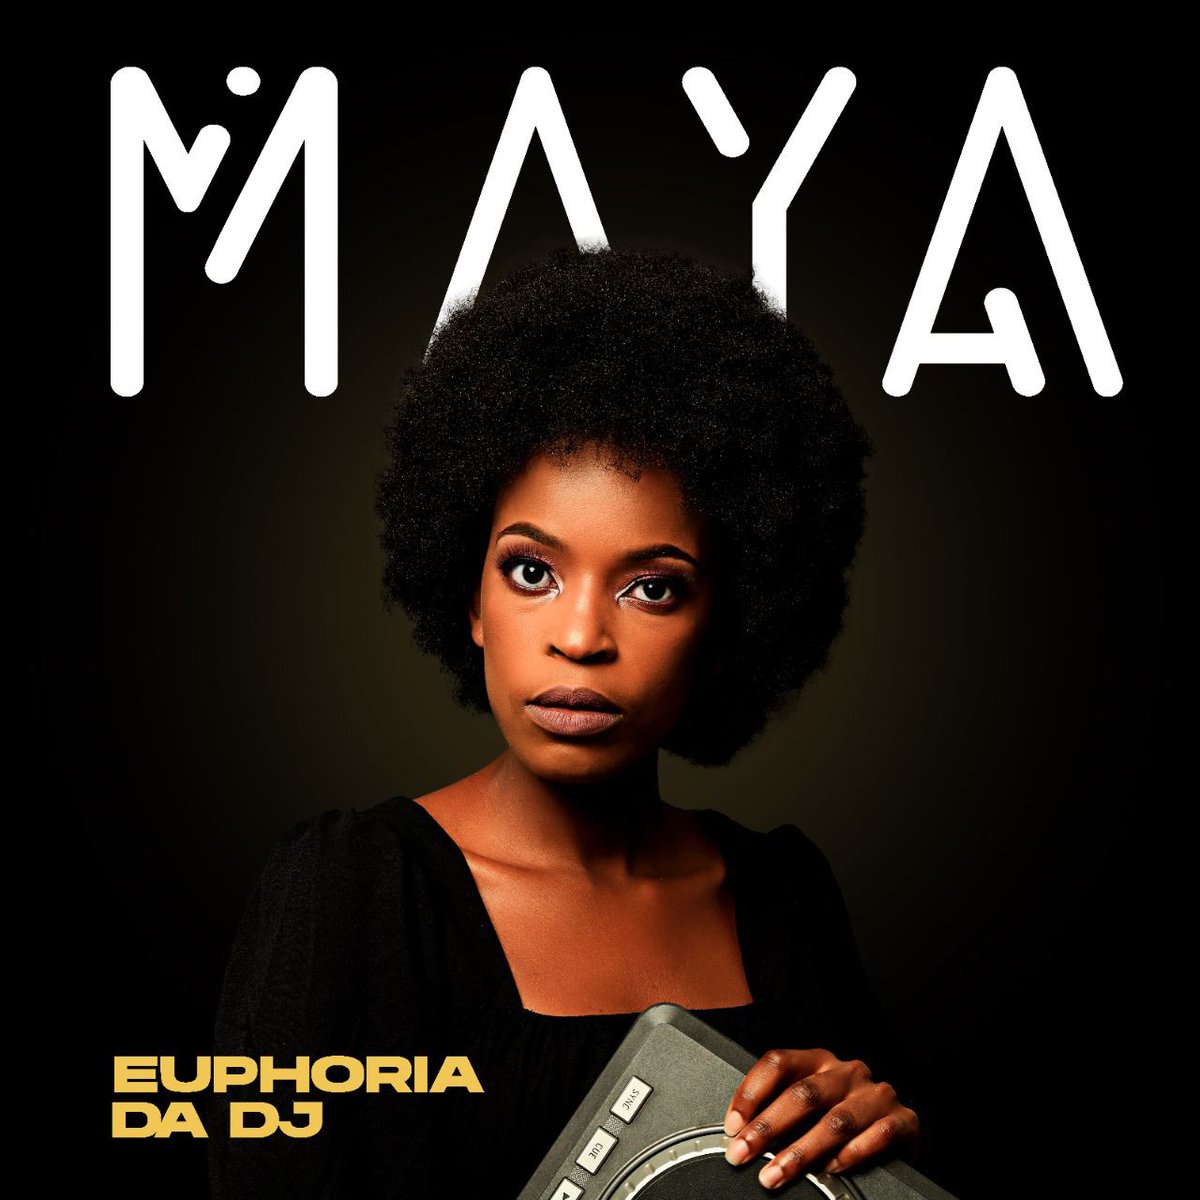 'Maya' single now available on all digital platforms, just click on the link below ⬇️
distrokid.com/hyperfollow/eu…
#Maya #Euphoriadadj #Ripdjsomebody #pitbullburn #Smirnoff1818 #ShayaIngoma1818